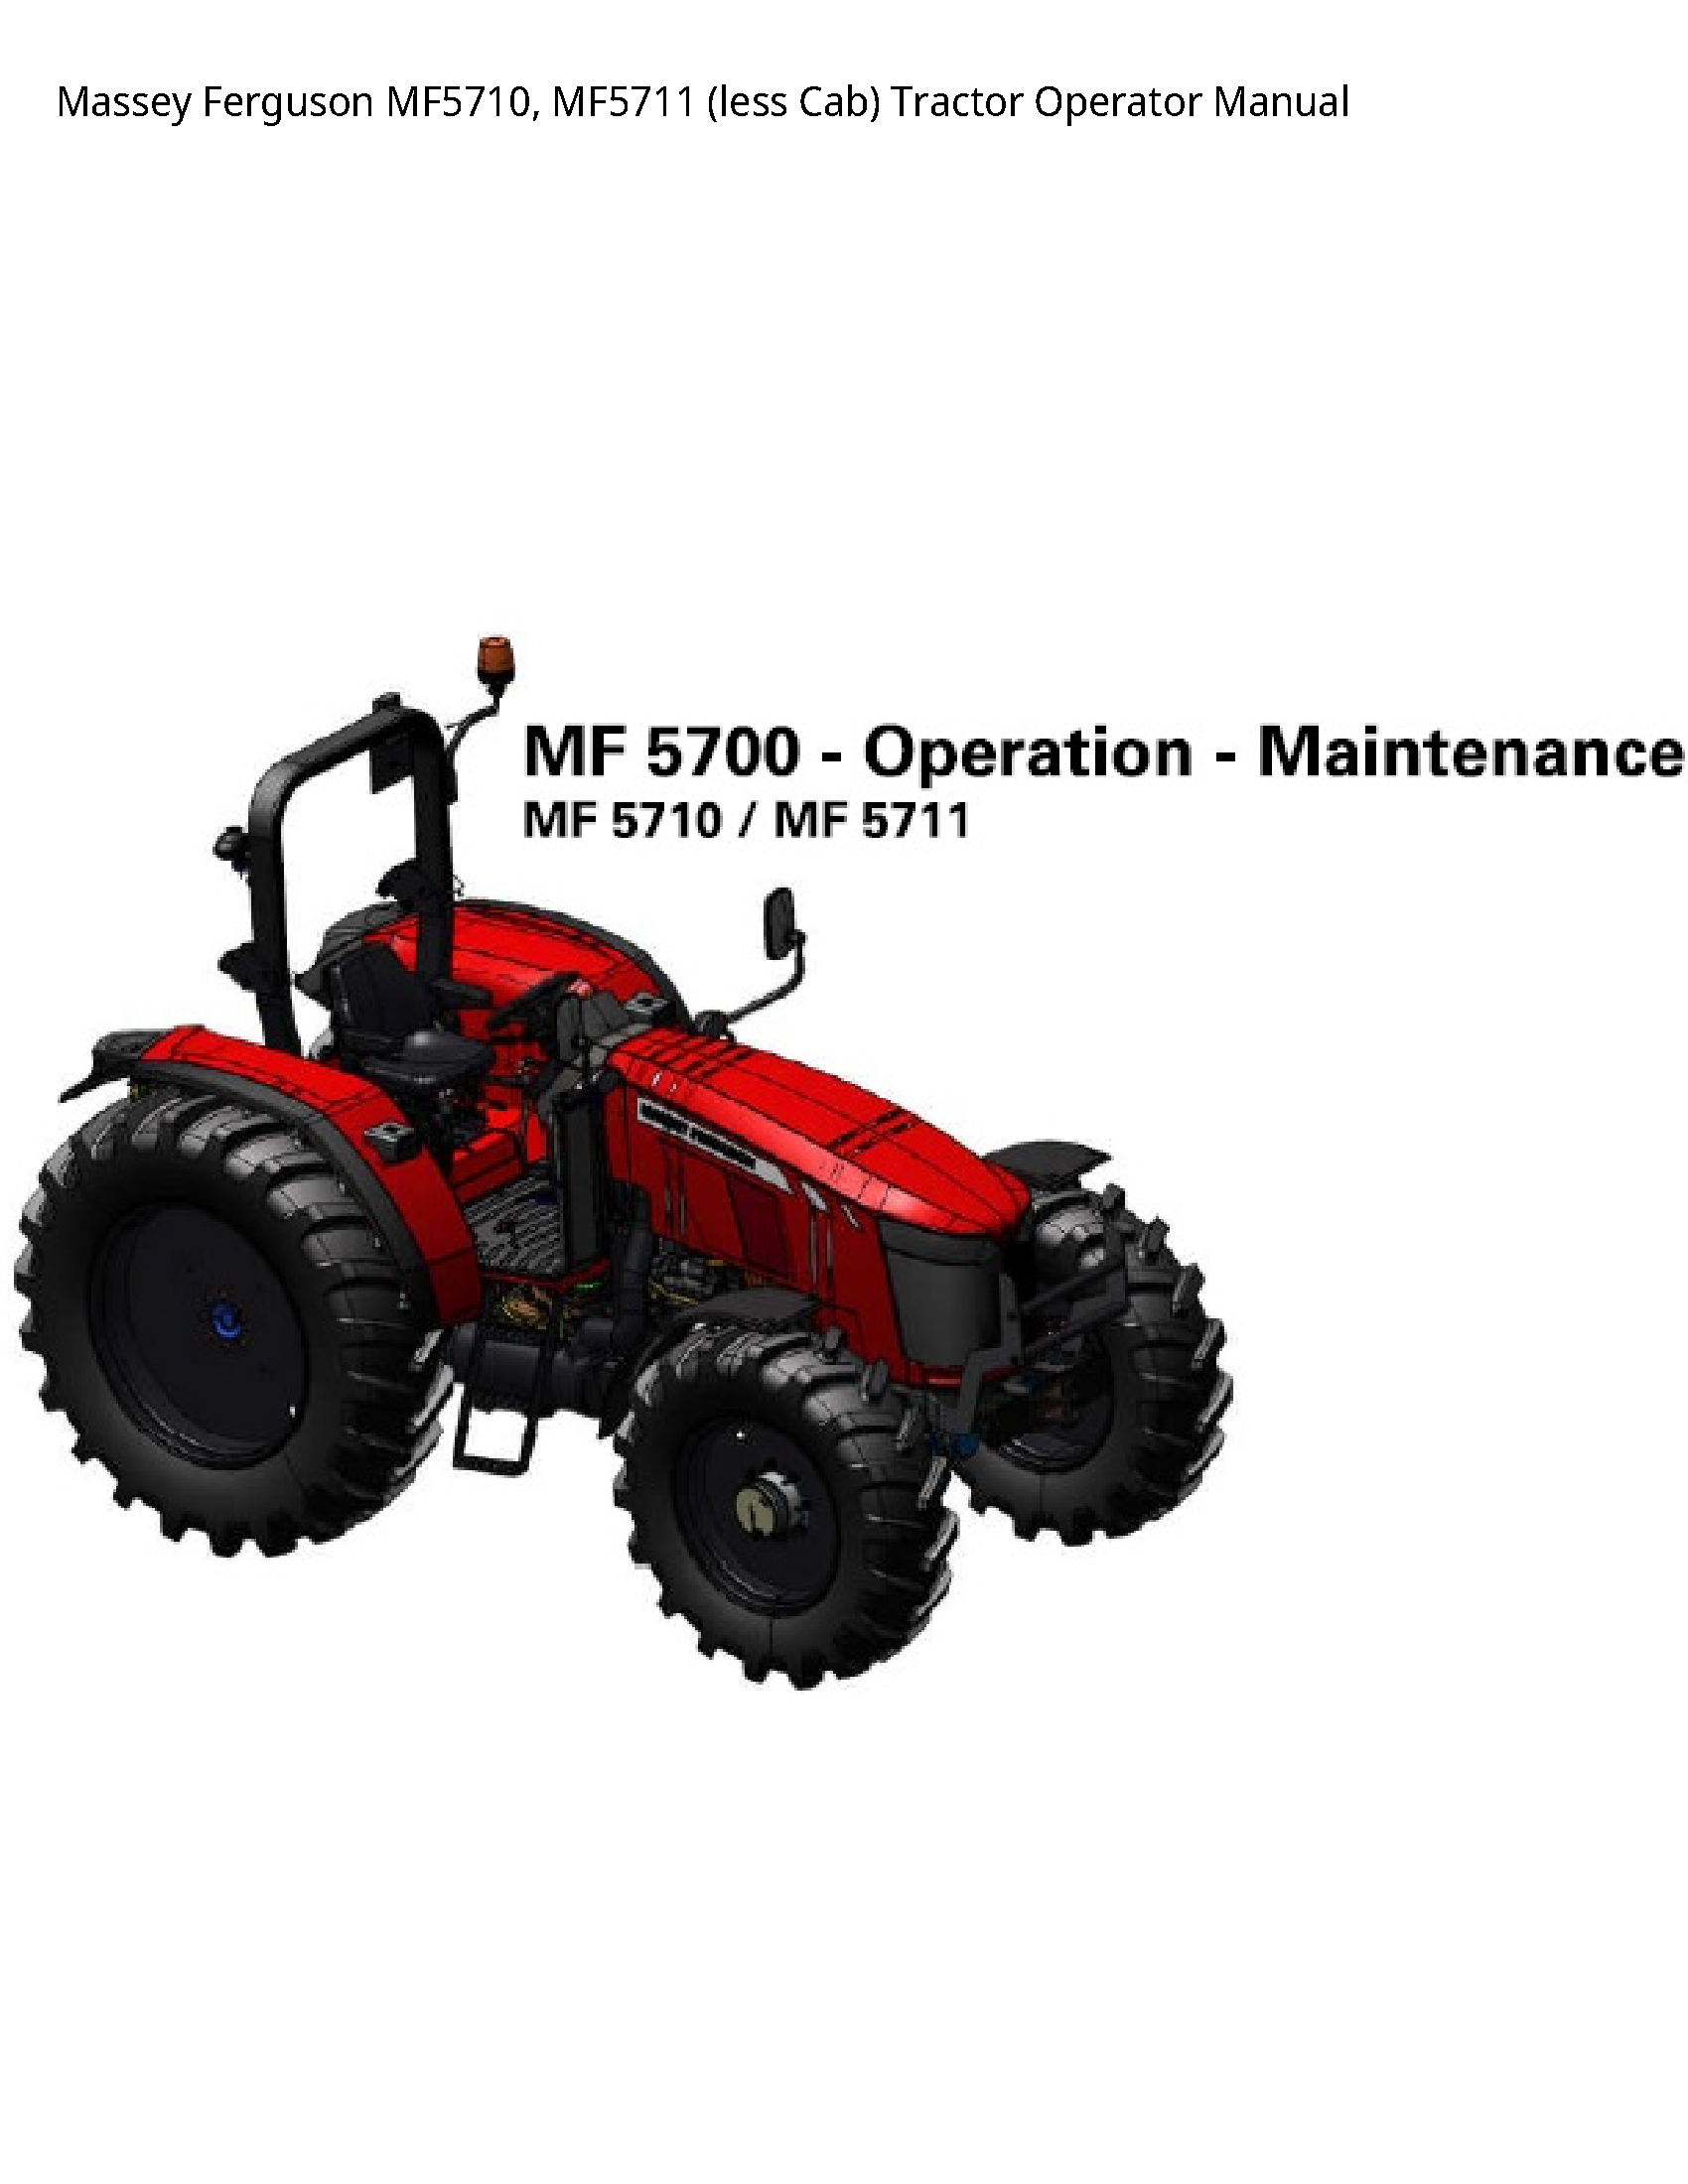 Massey Ferguson MF5710 (less Cab) Tractor Operator manual